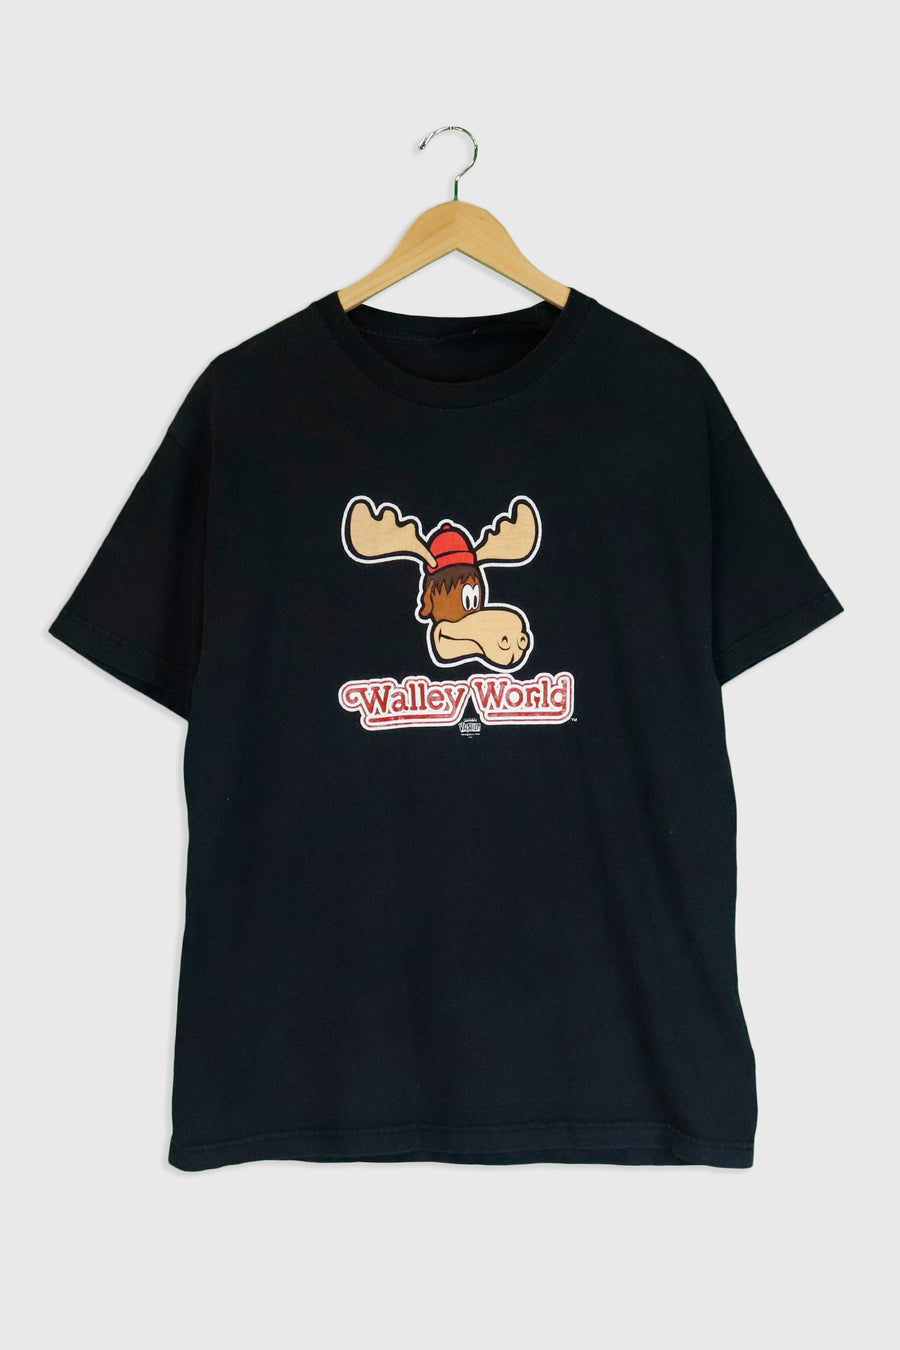 Vintage Walley World Vacation Moose T Shirt Sz M